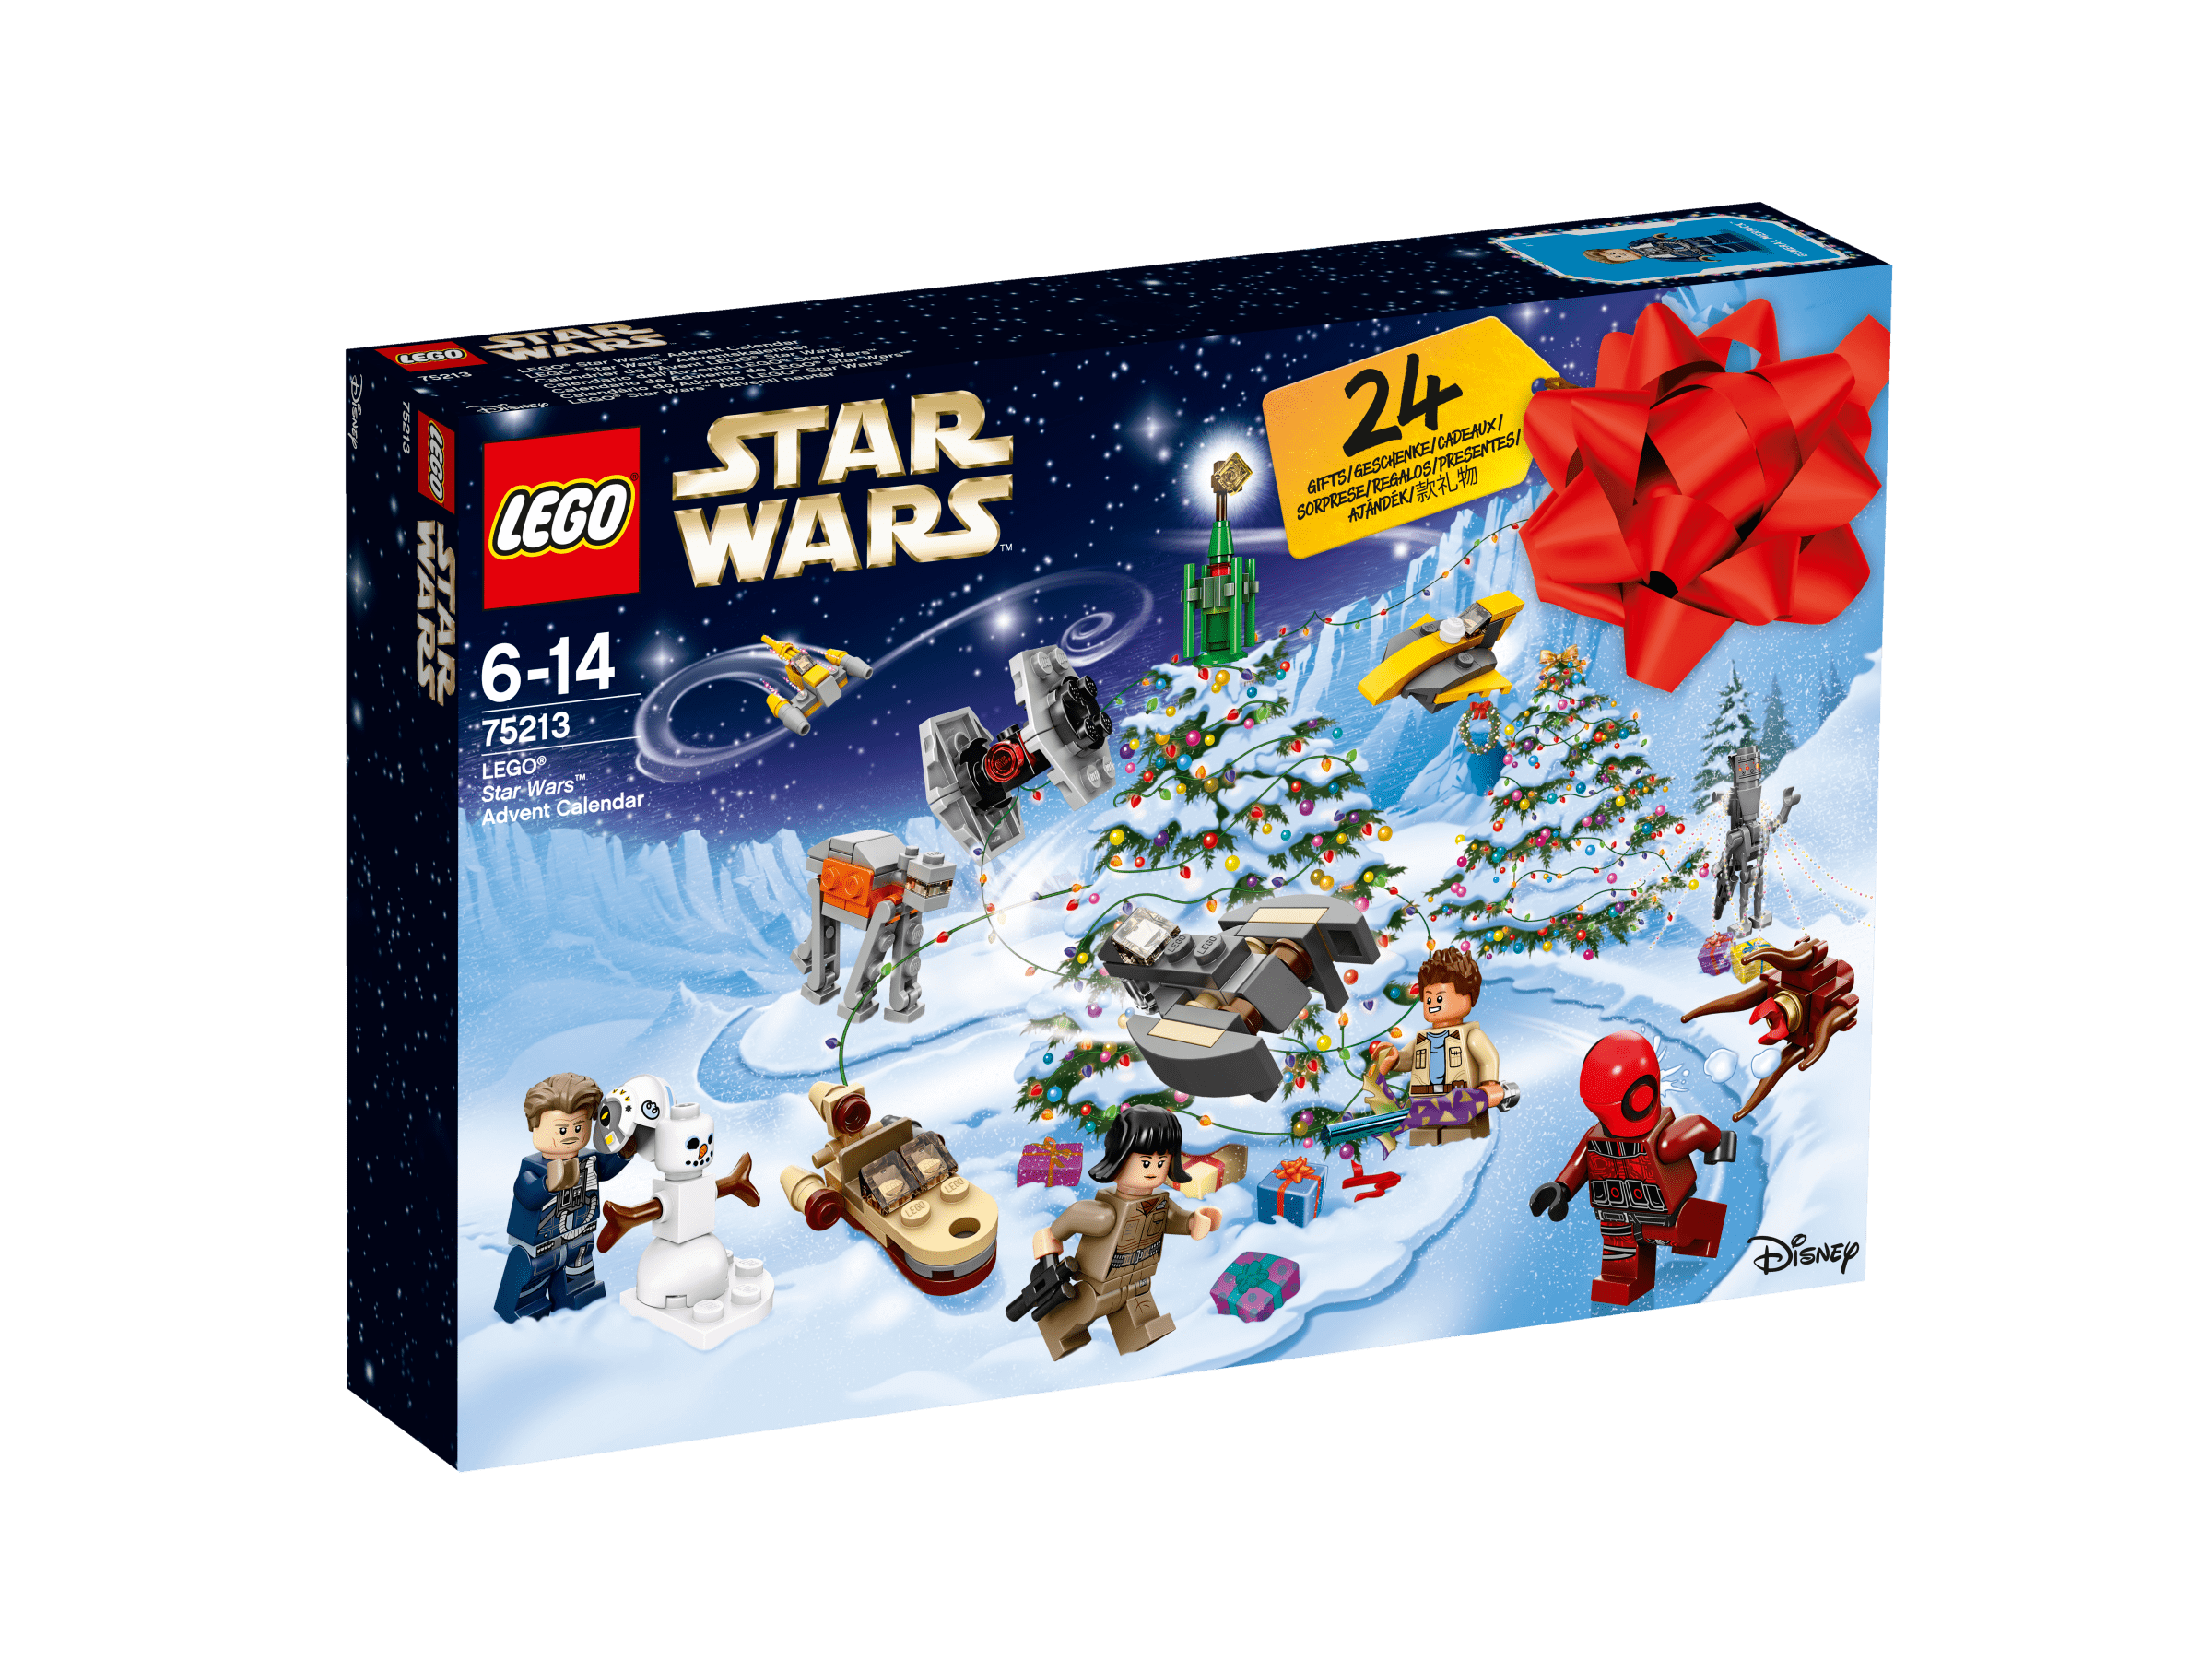 LEGO Star Wars 75213 Advent Calendar 2018 Pandemonium